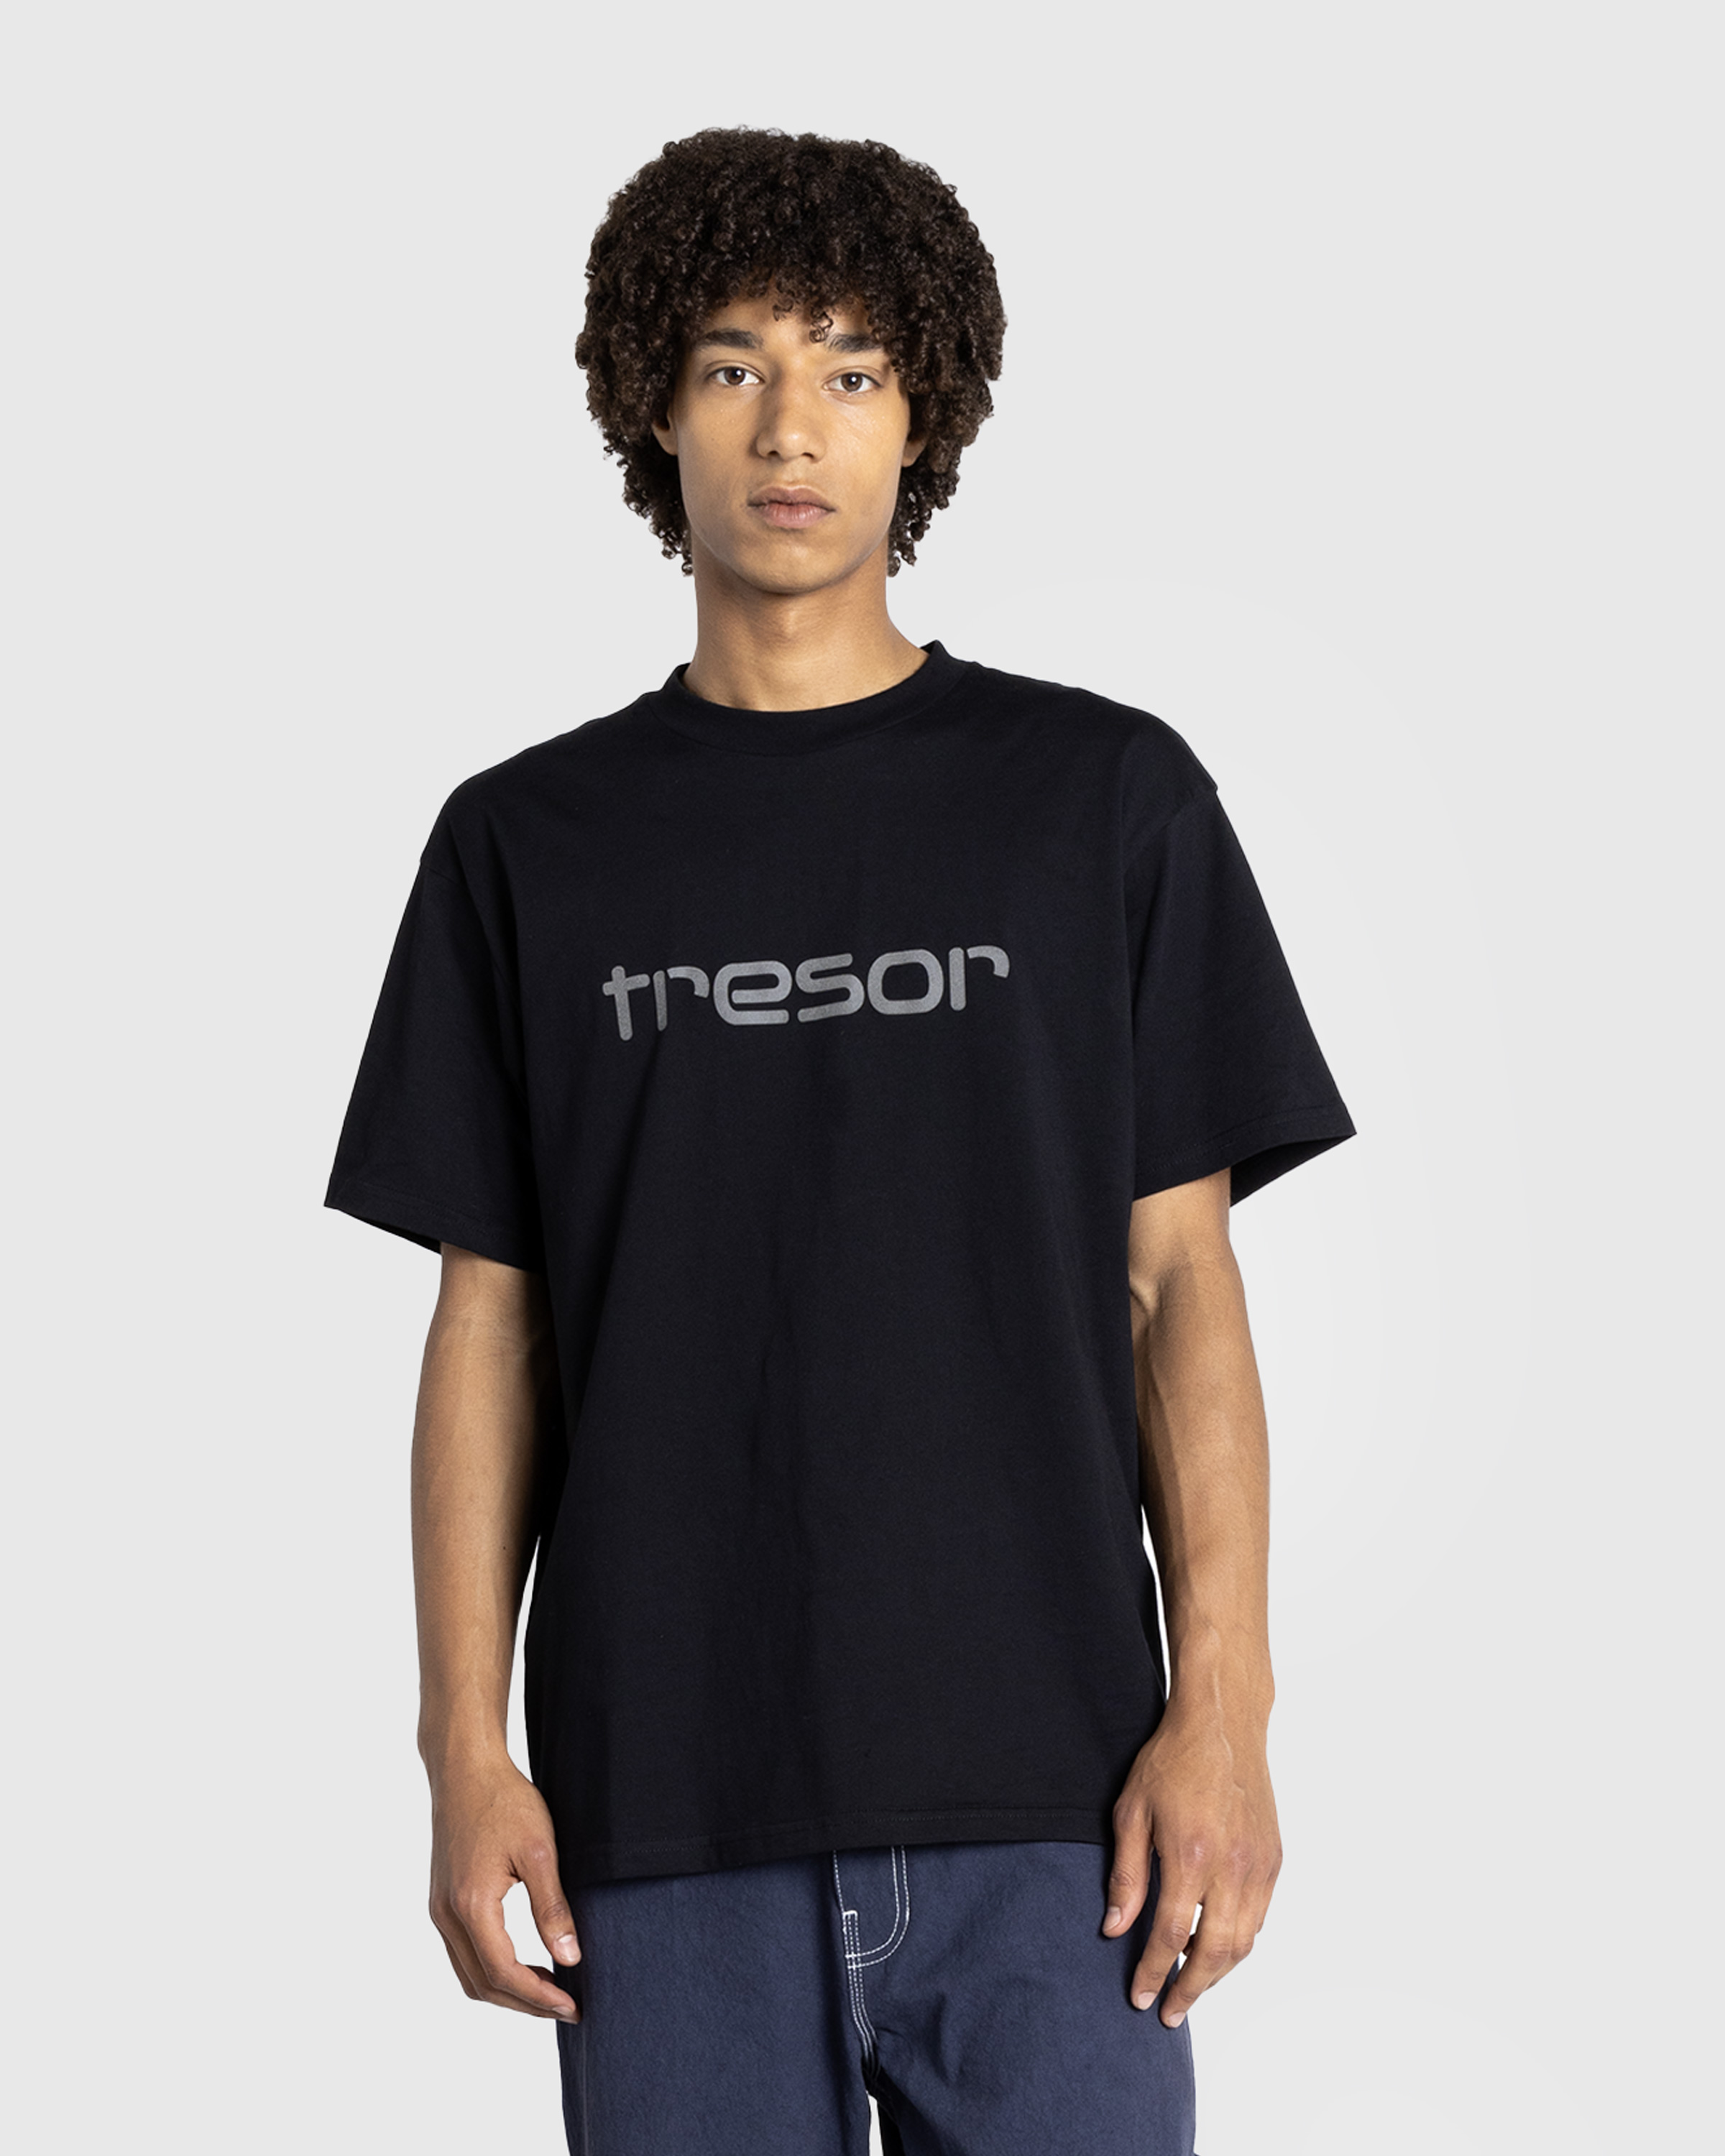 Carhartt WIP x Tresor – Techno Alliance S/S T-Shirt Black/Dark Grey Reflective - Tops - Black - Image 2